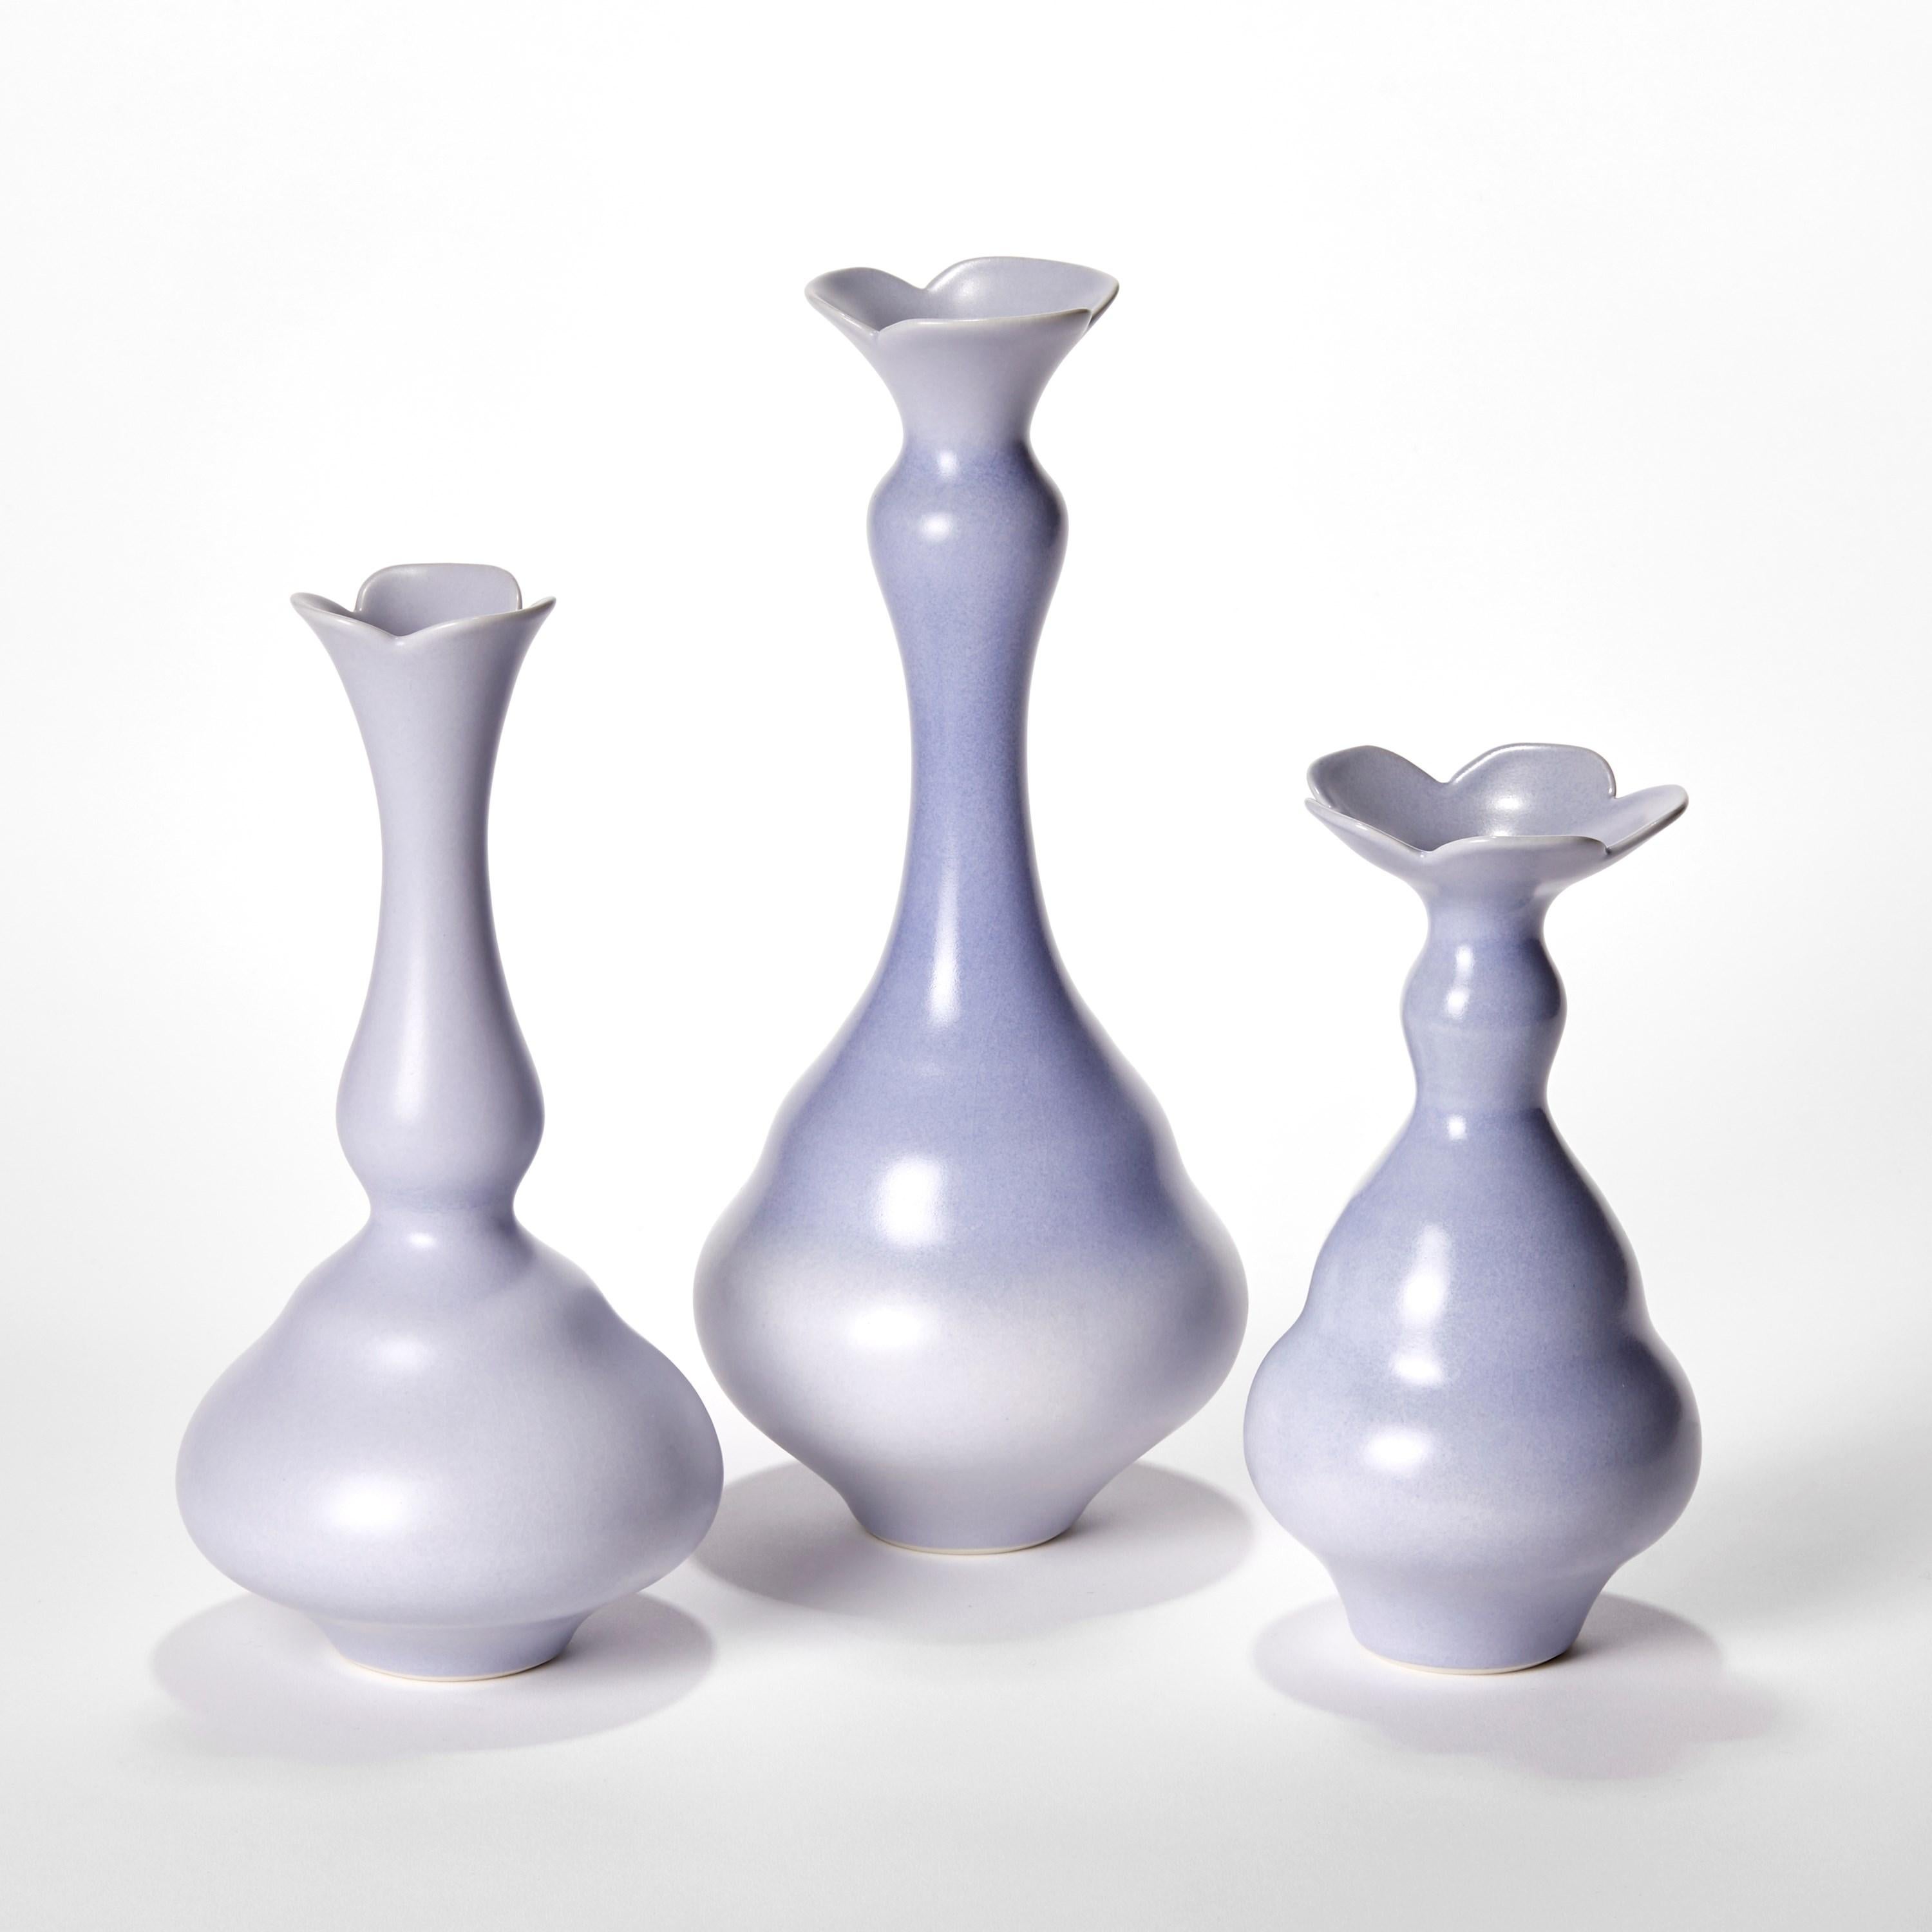 'Cobalt Trio’ is a unique collection of porcelain sculptural vessels by the British artist, Vivienne Foley.

Left to right in the first image:

Cobalt Trilobed Funnel Neck Vase  H 26 cm W 12.5 cm D 12.5 cm
Cobalt Trilobed Shaded Vase  H 31 cm W 13